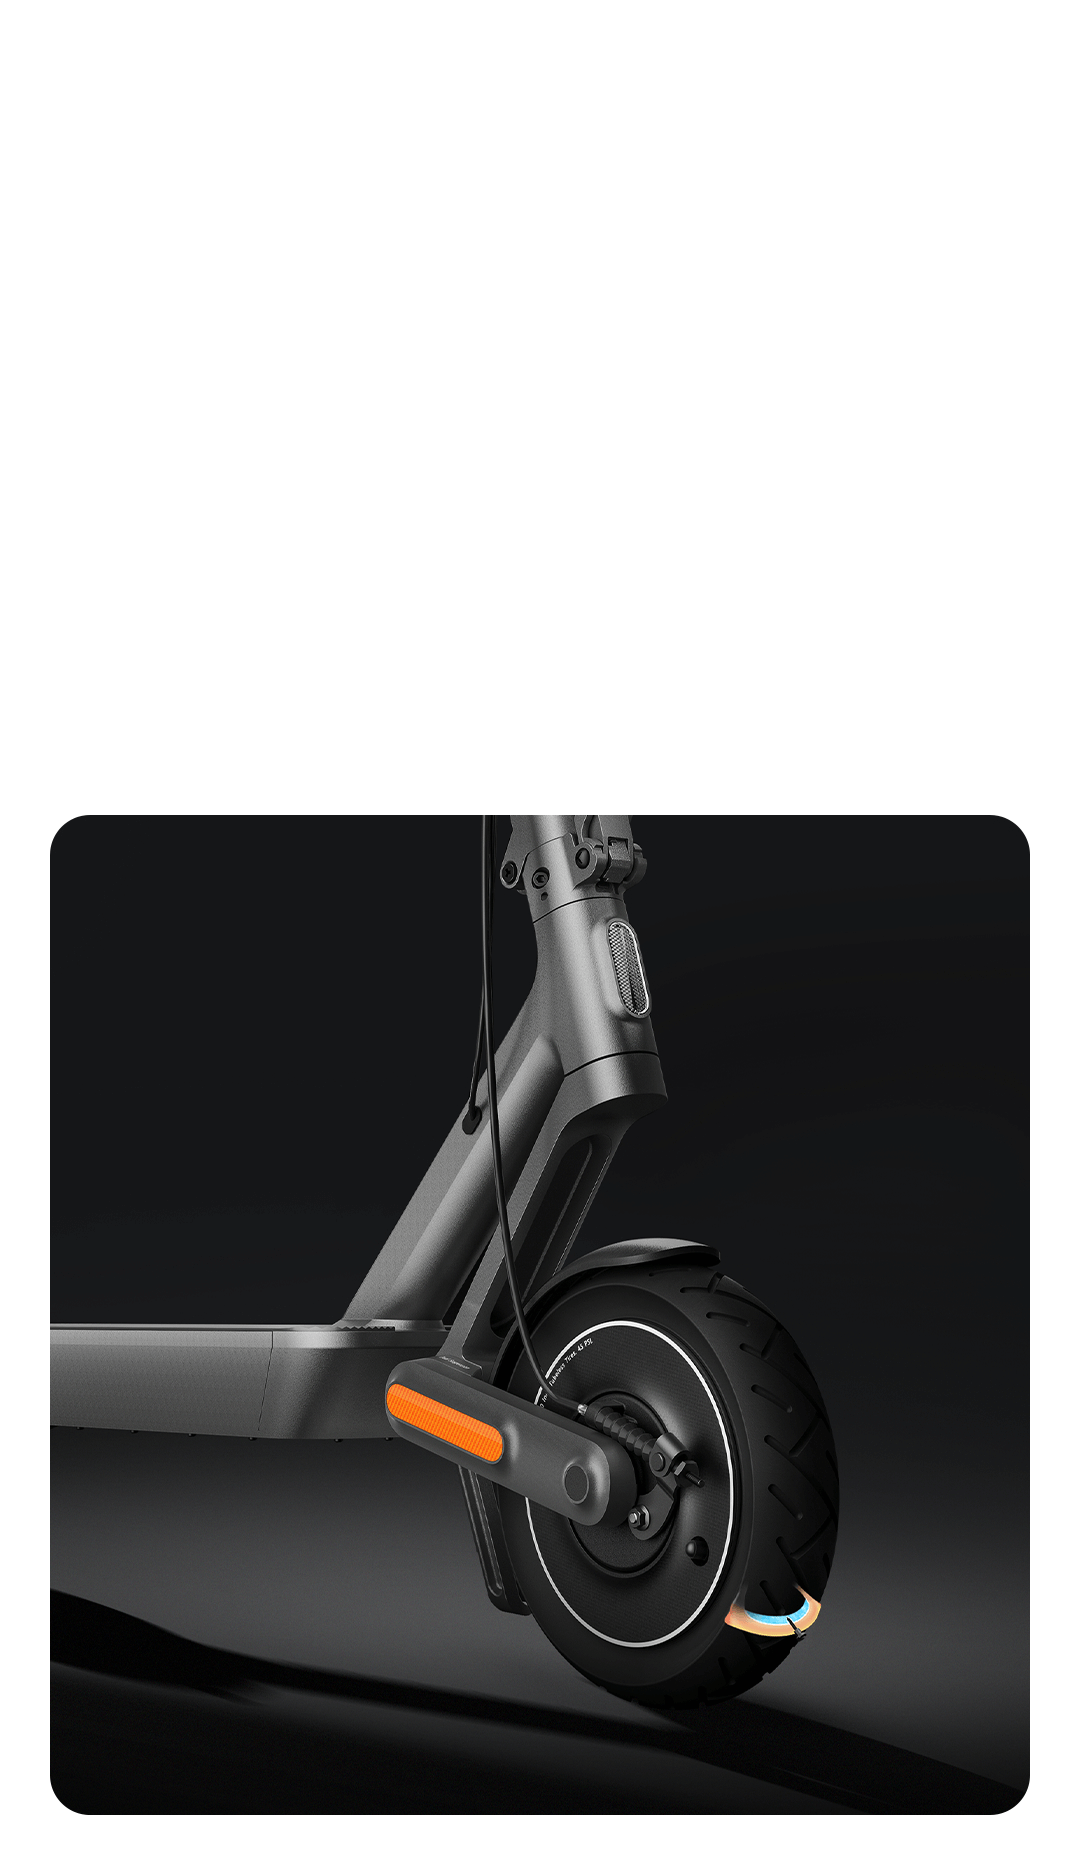 Xiaomi Mi 4 Pro Electric Scooter Black